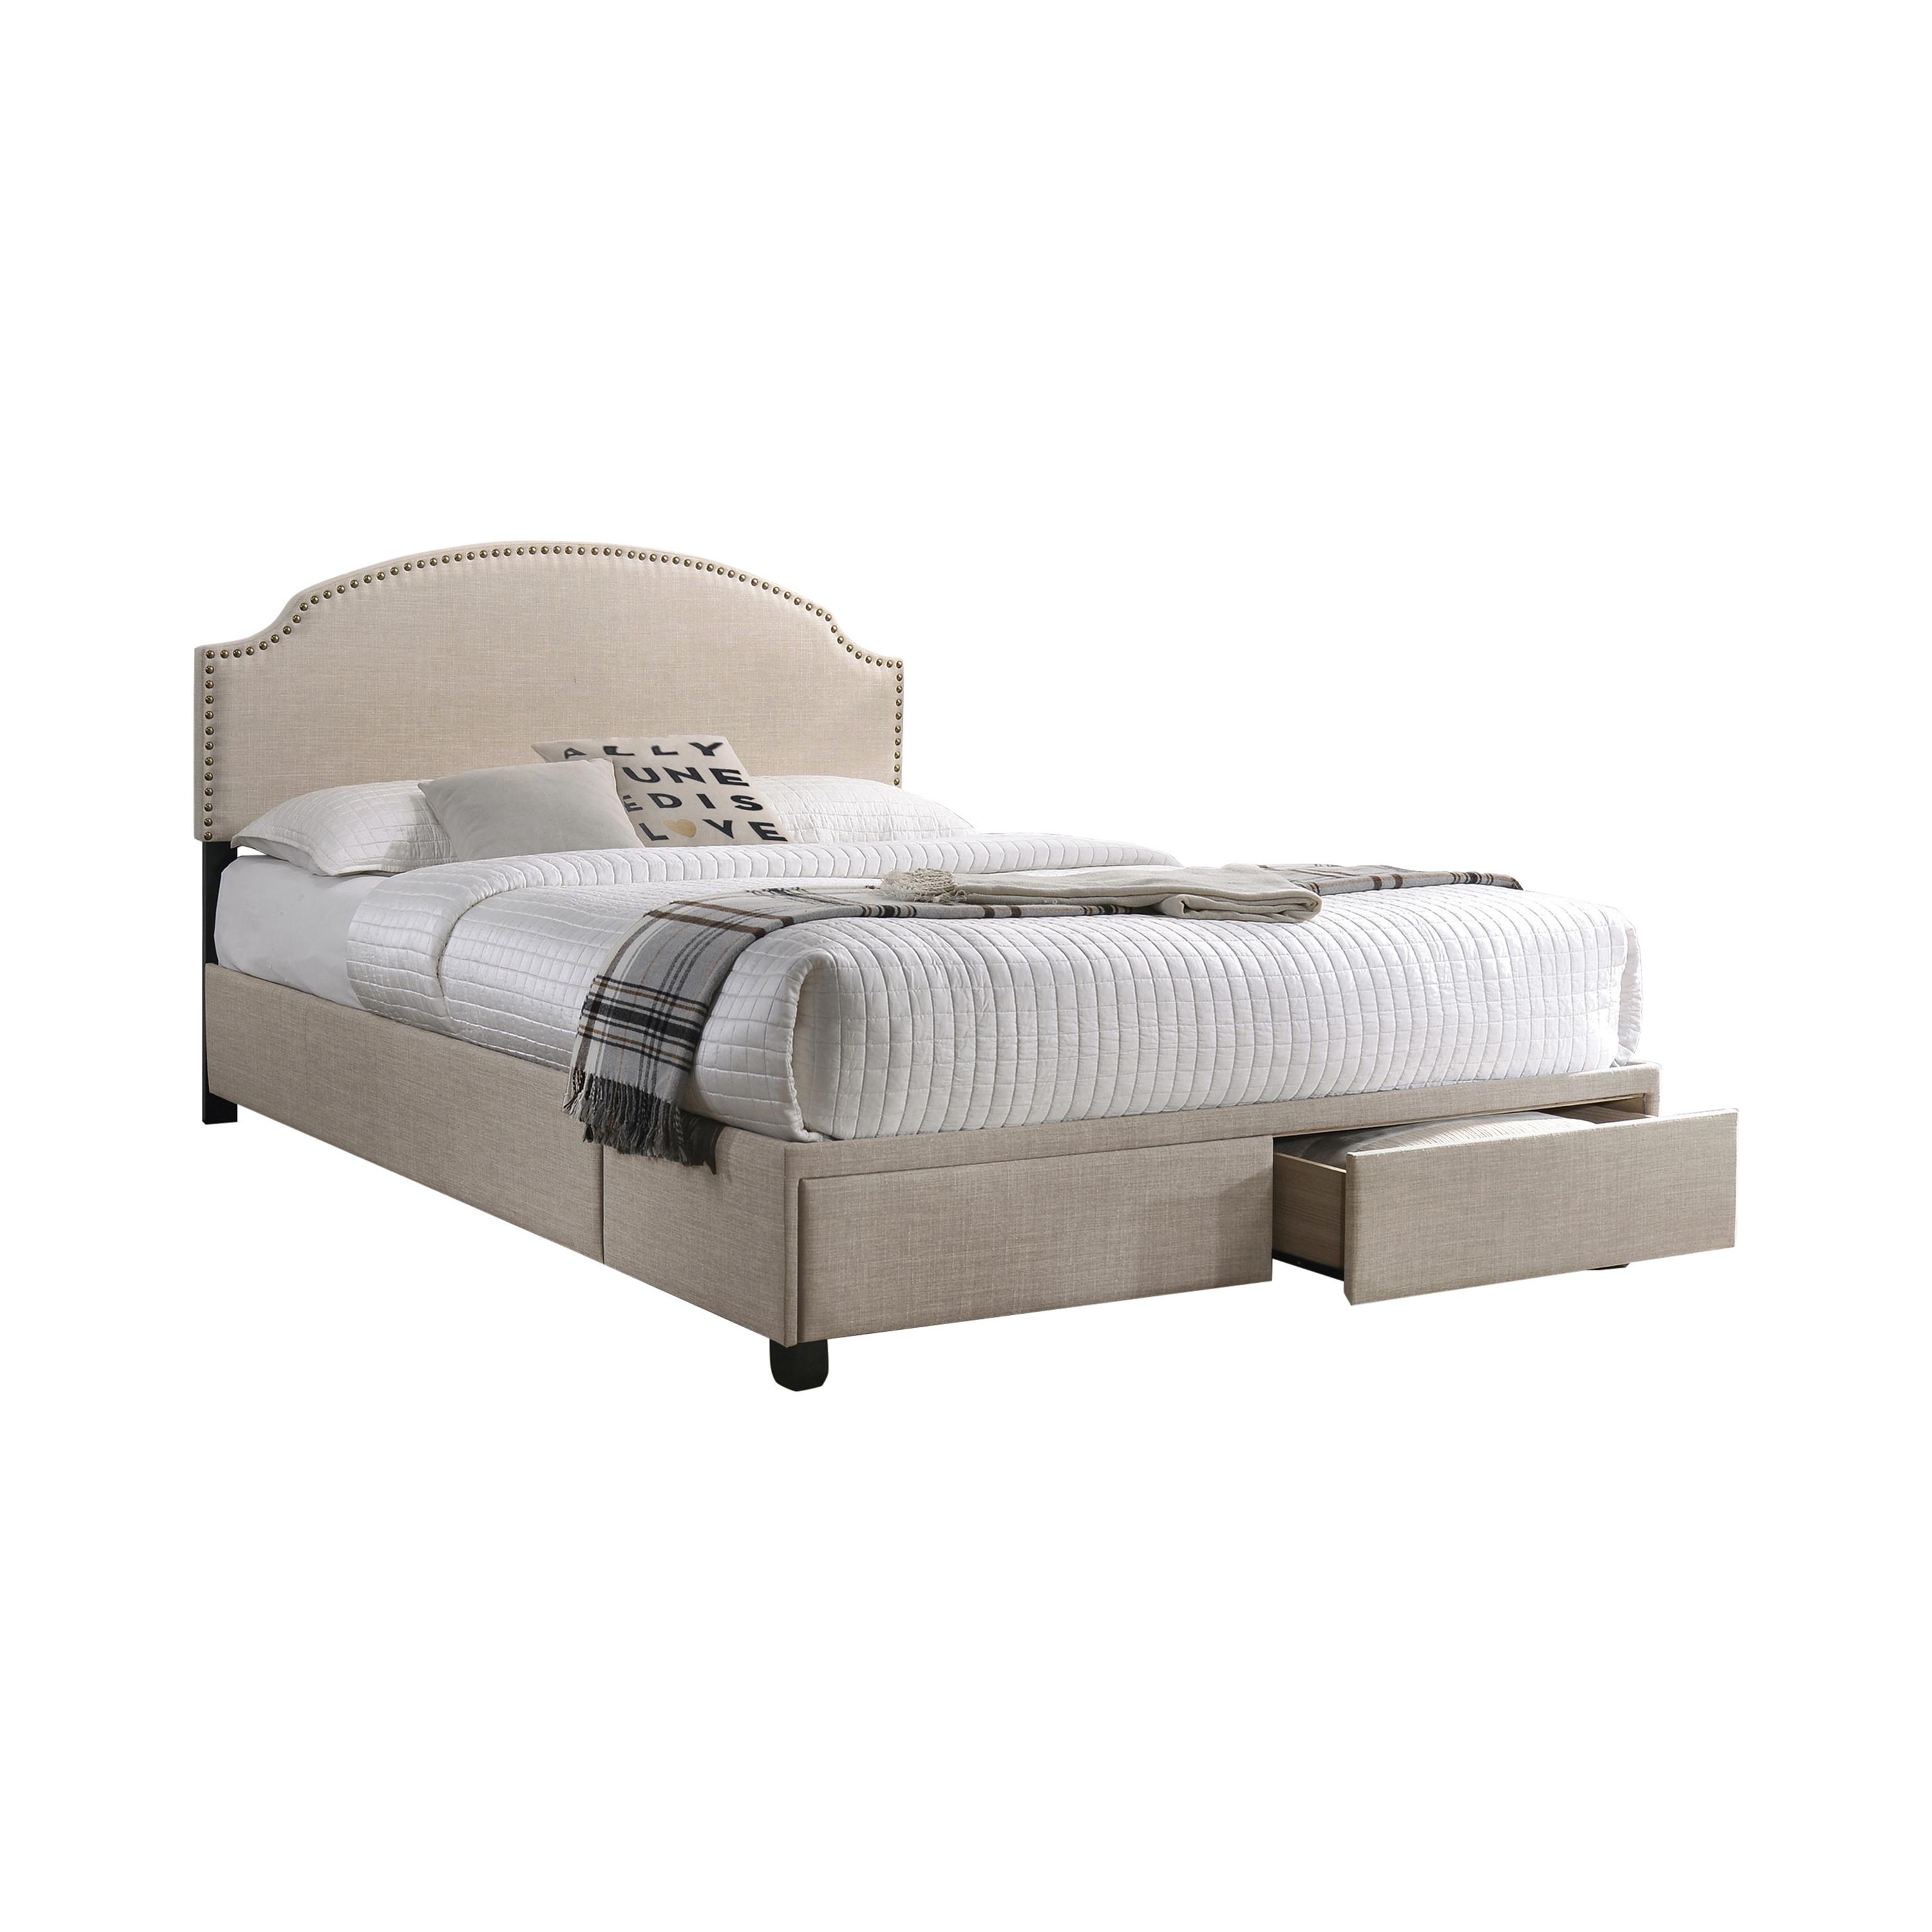 Modern Bed 305896Q Newdale 305896Q in Beige Fabric